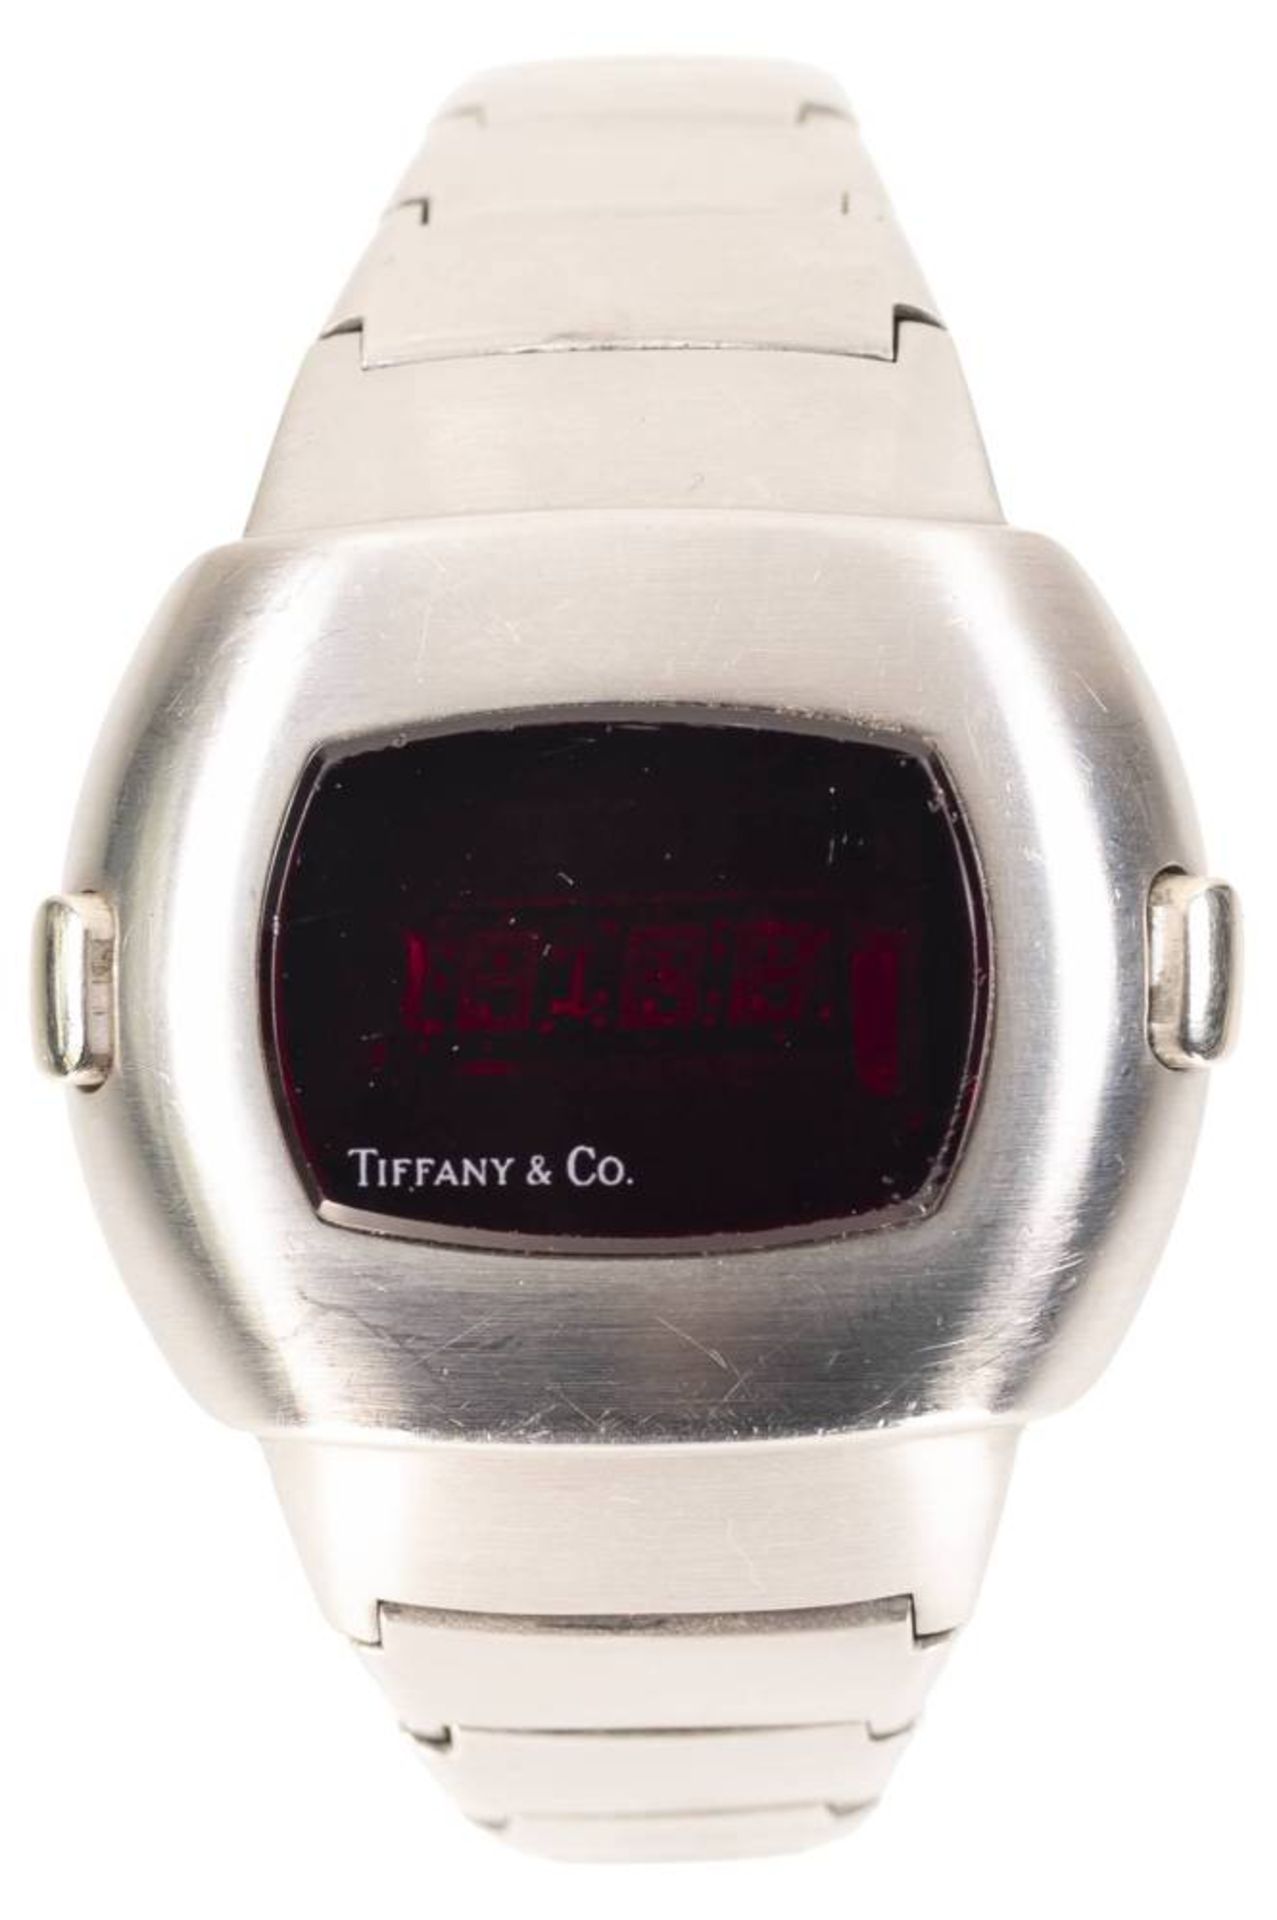 Konvolut mit 5 Armbanduhren, darunter TIFFANY & CO Pulsar LED-Uhr Time Computer 1973, Funktion nicht - Bild 2 aus 16